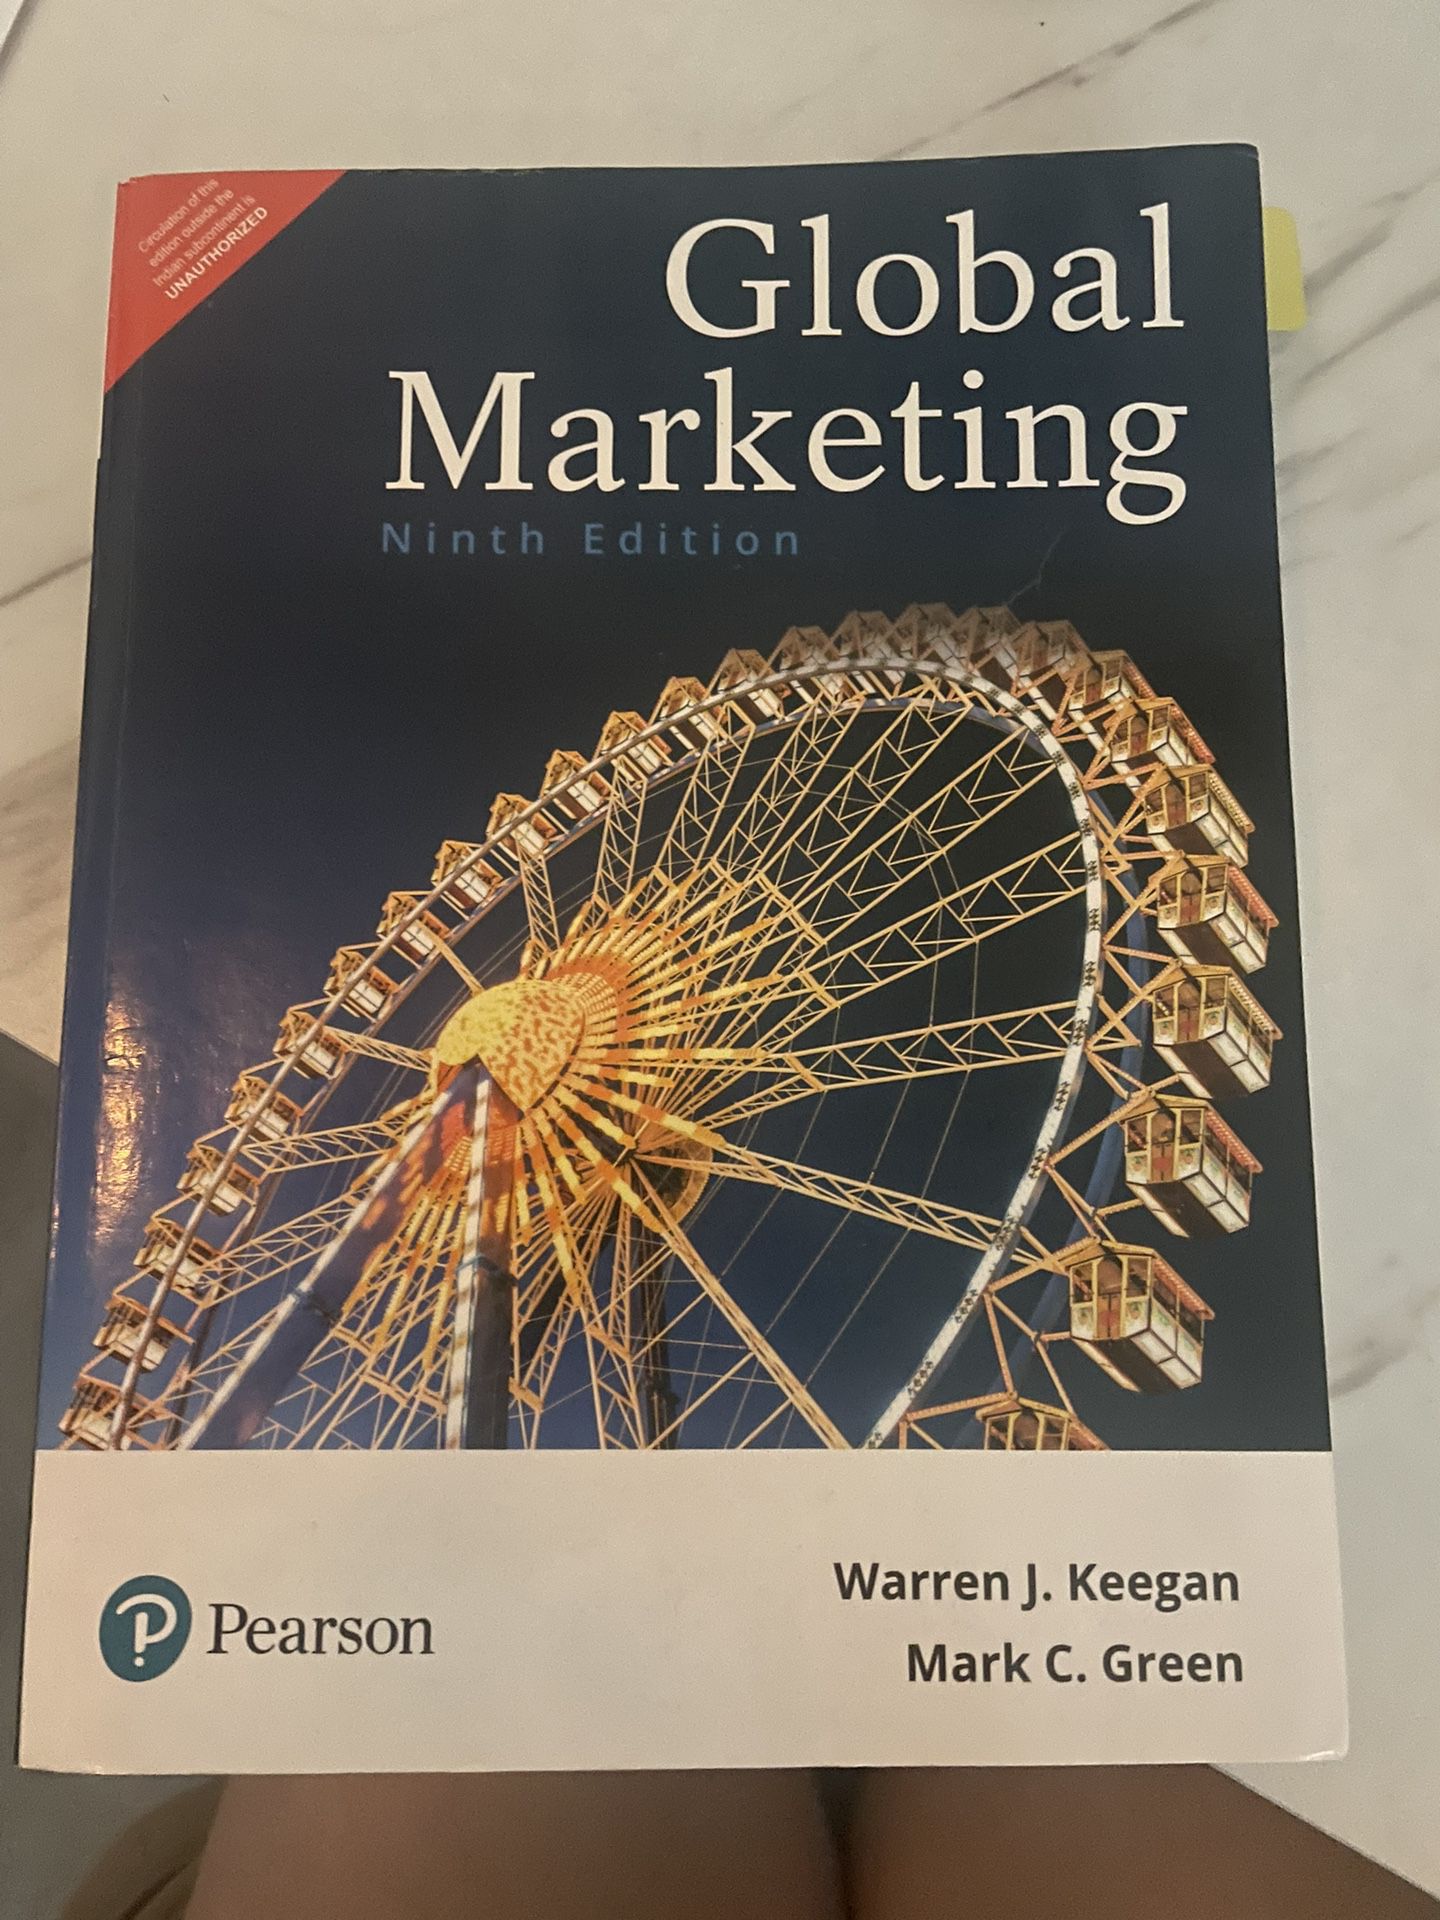 Global Marketing 9th Edition by Warren Keegan (Author), Mark Green (Author)